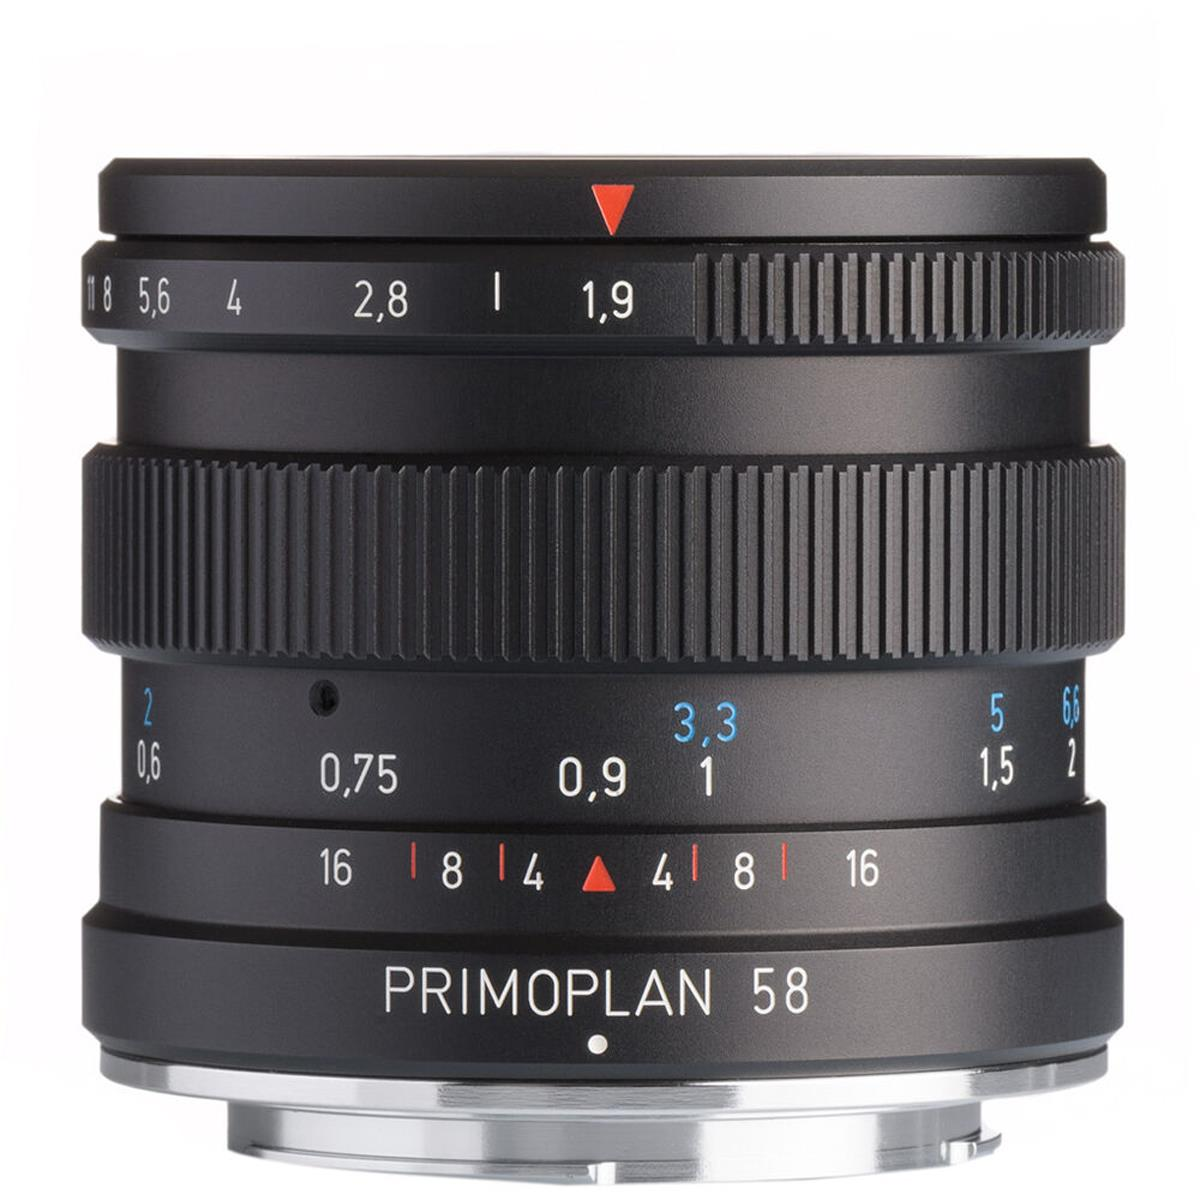 Meyer-Optik Gorlitz Primoplan 58 f1.9 II Lens for Canon RF